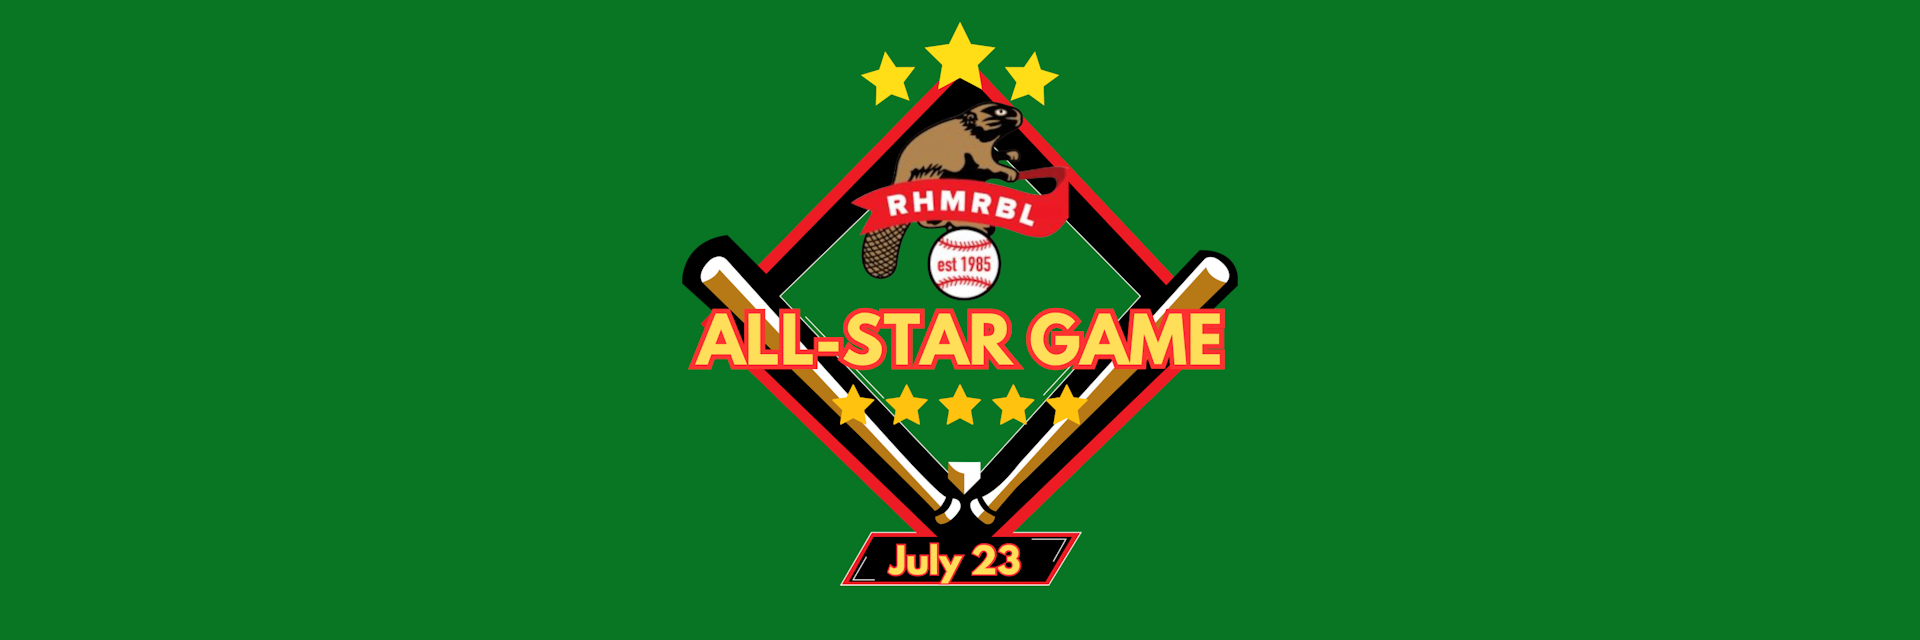 RHMRBL All Star Game - July 23